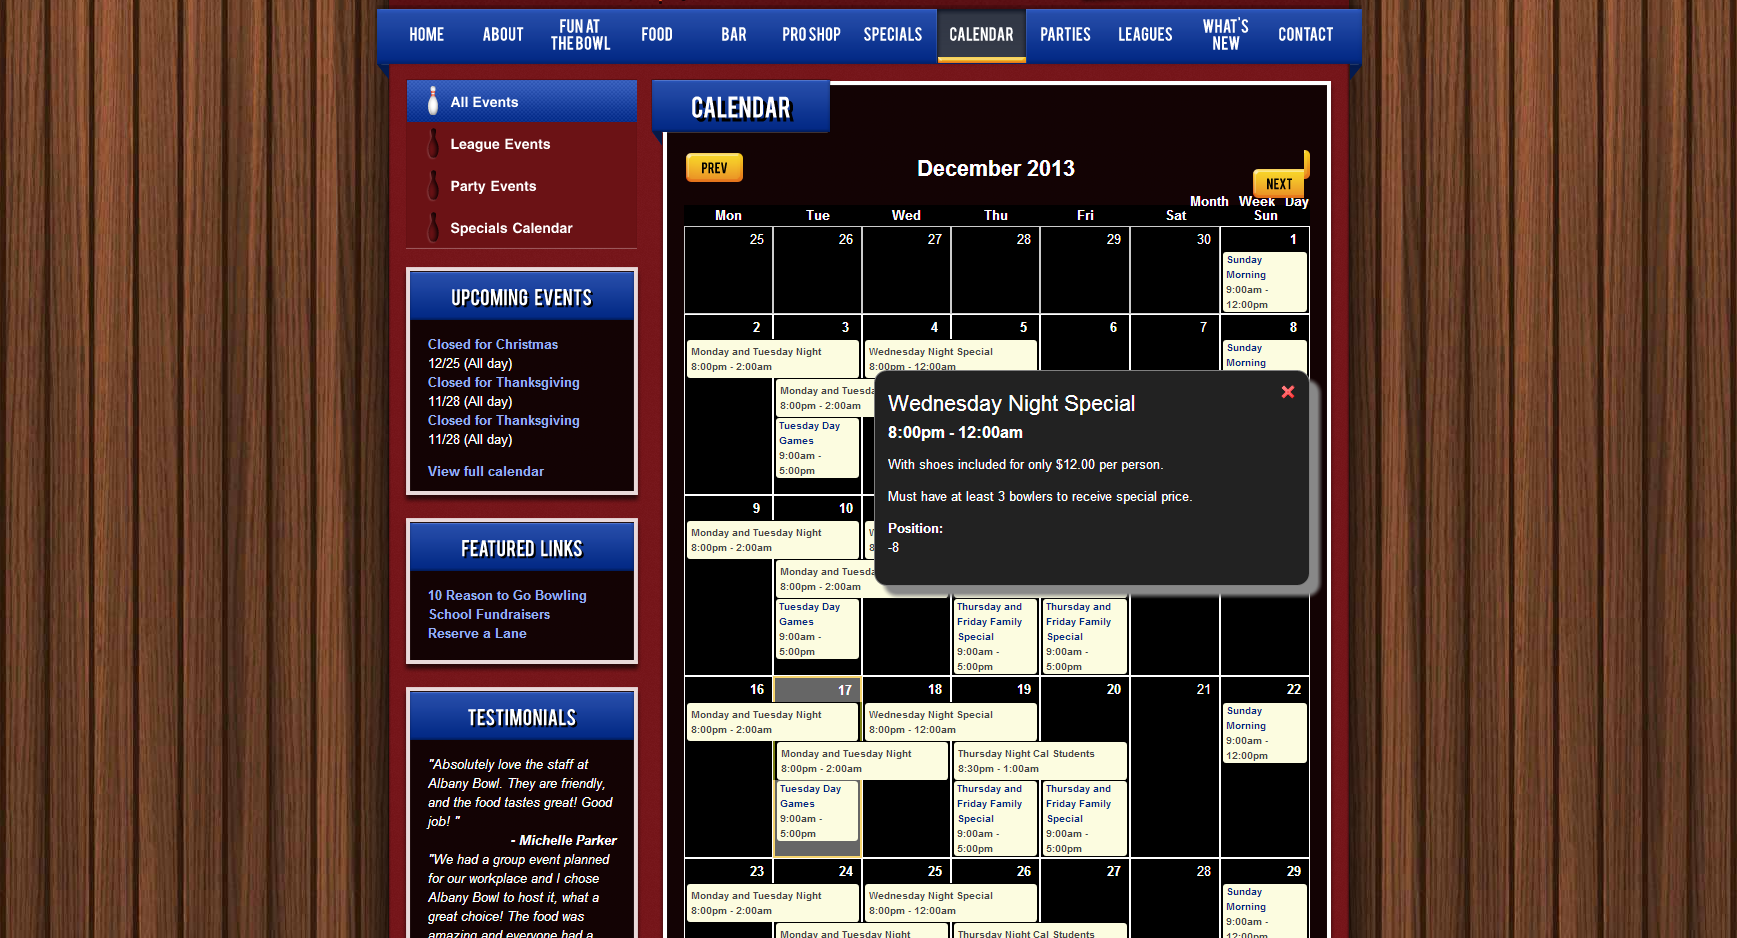 Albany Bowl website -- calendar with event categories